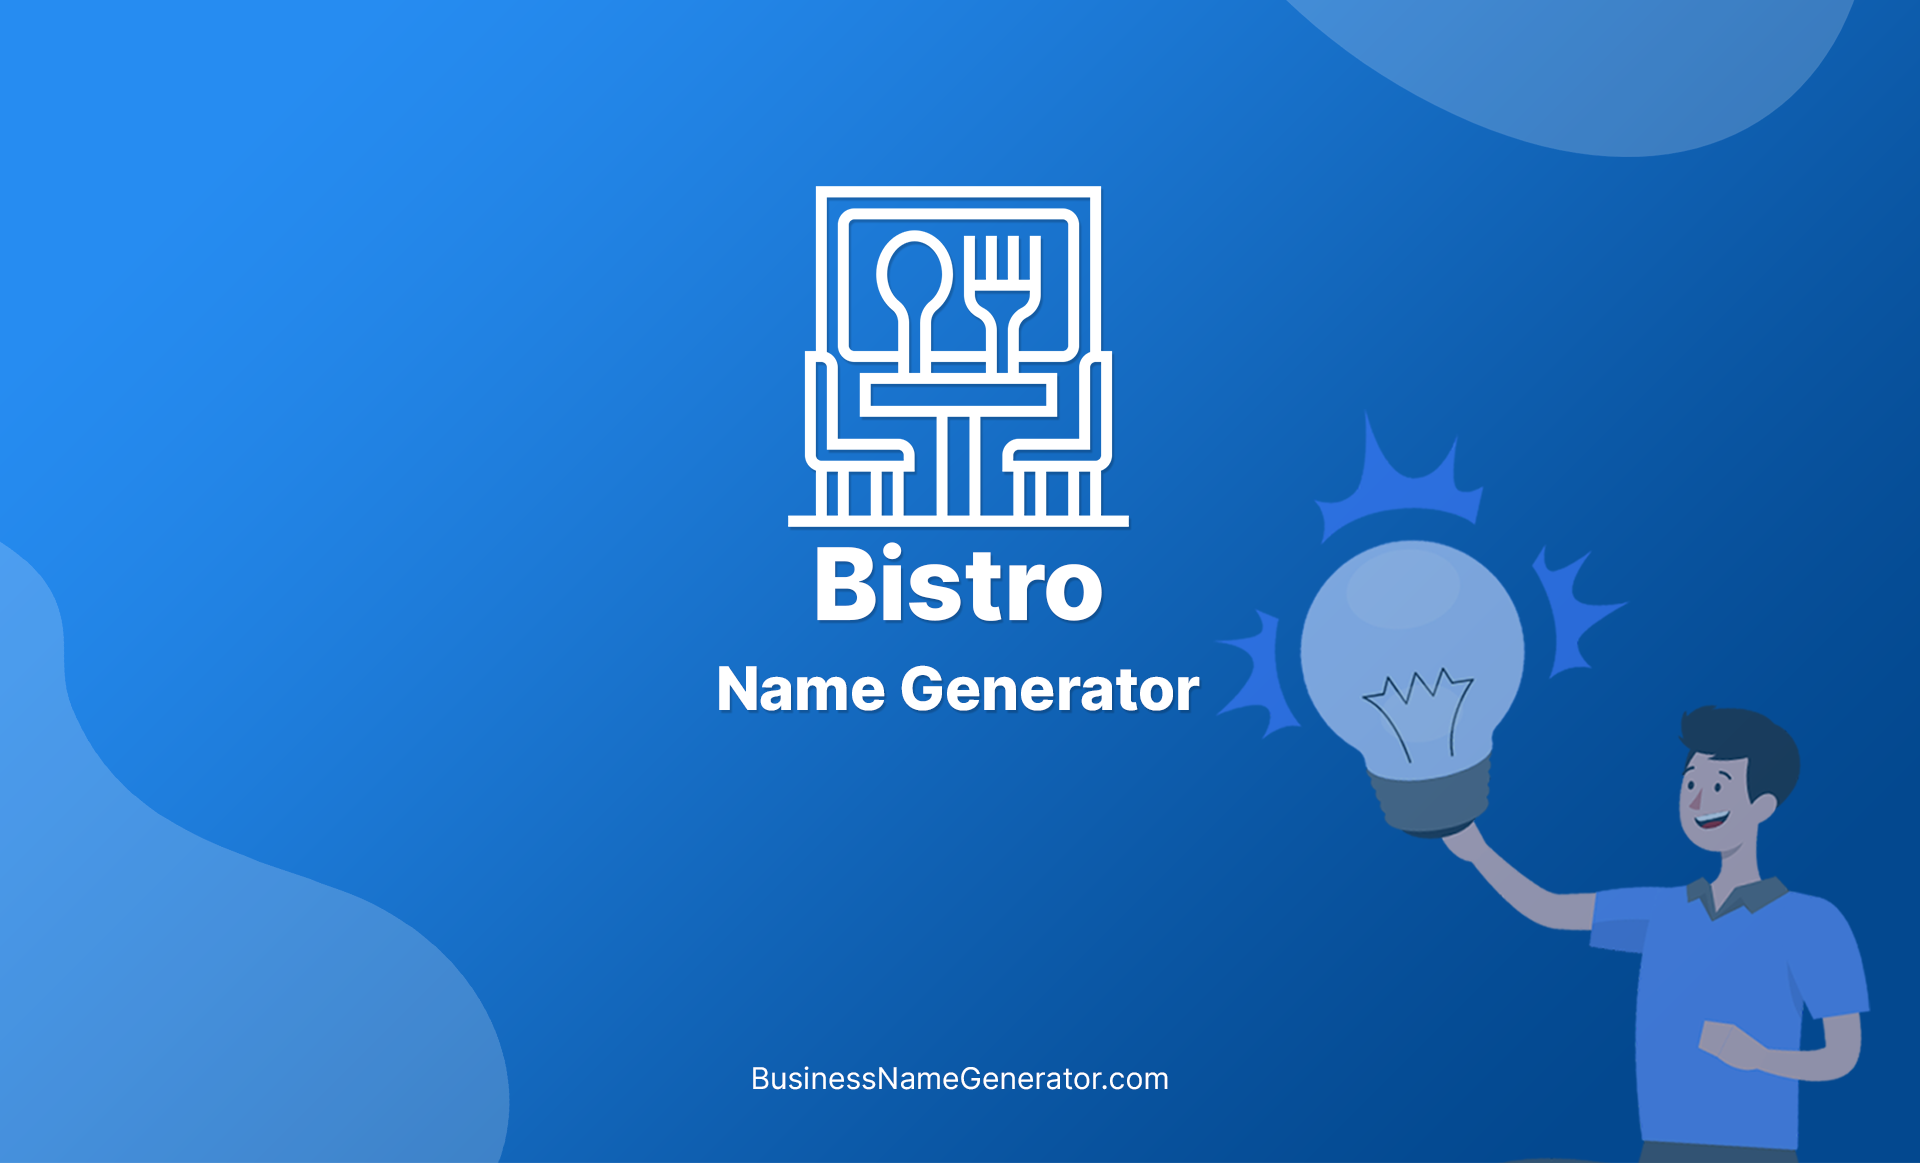 Bistro Name Generator